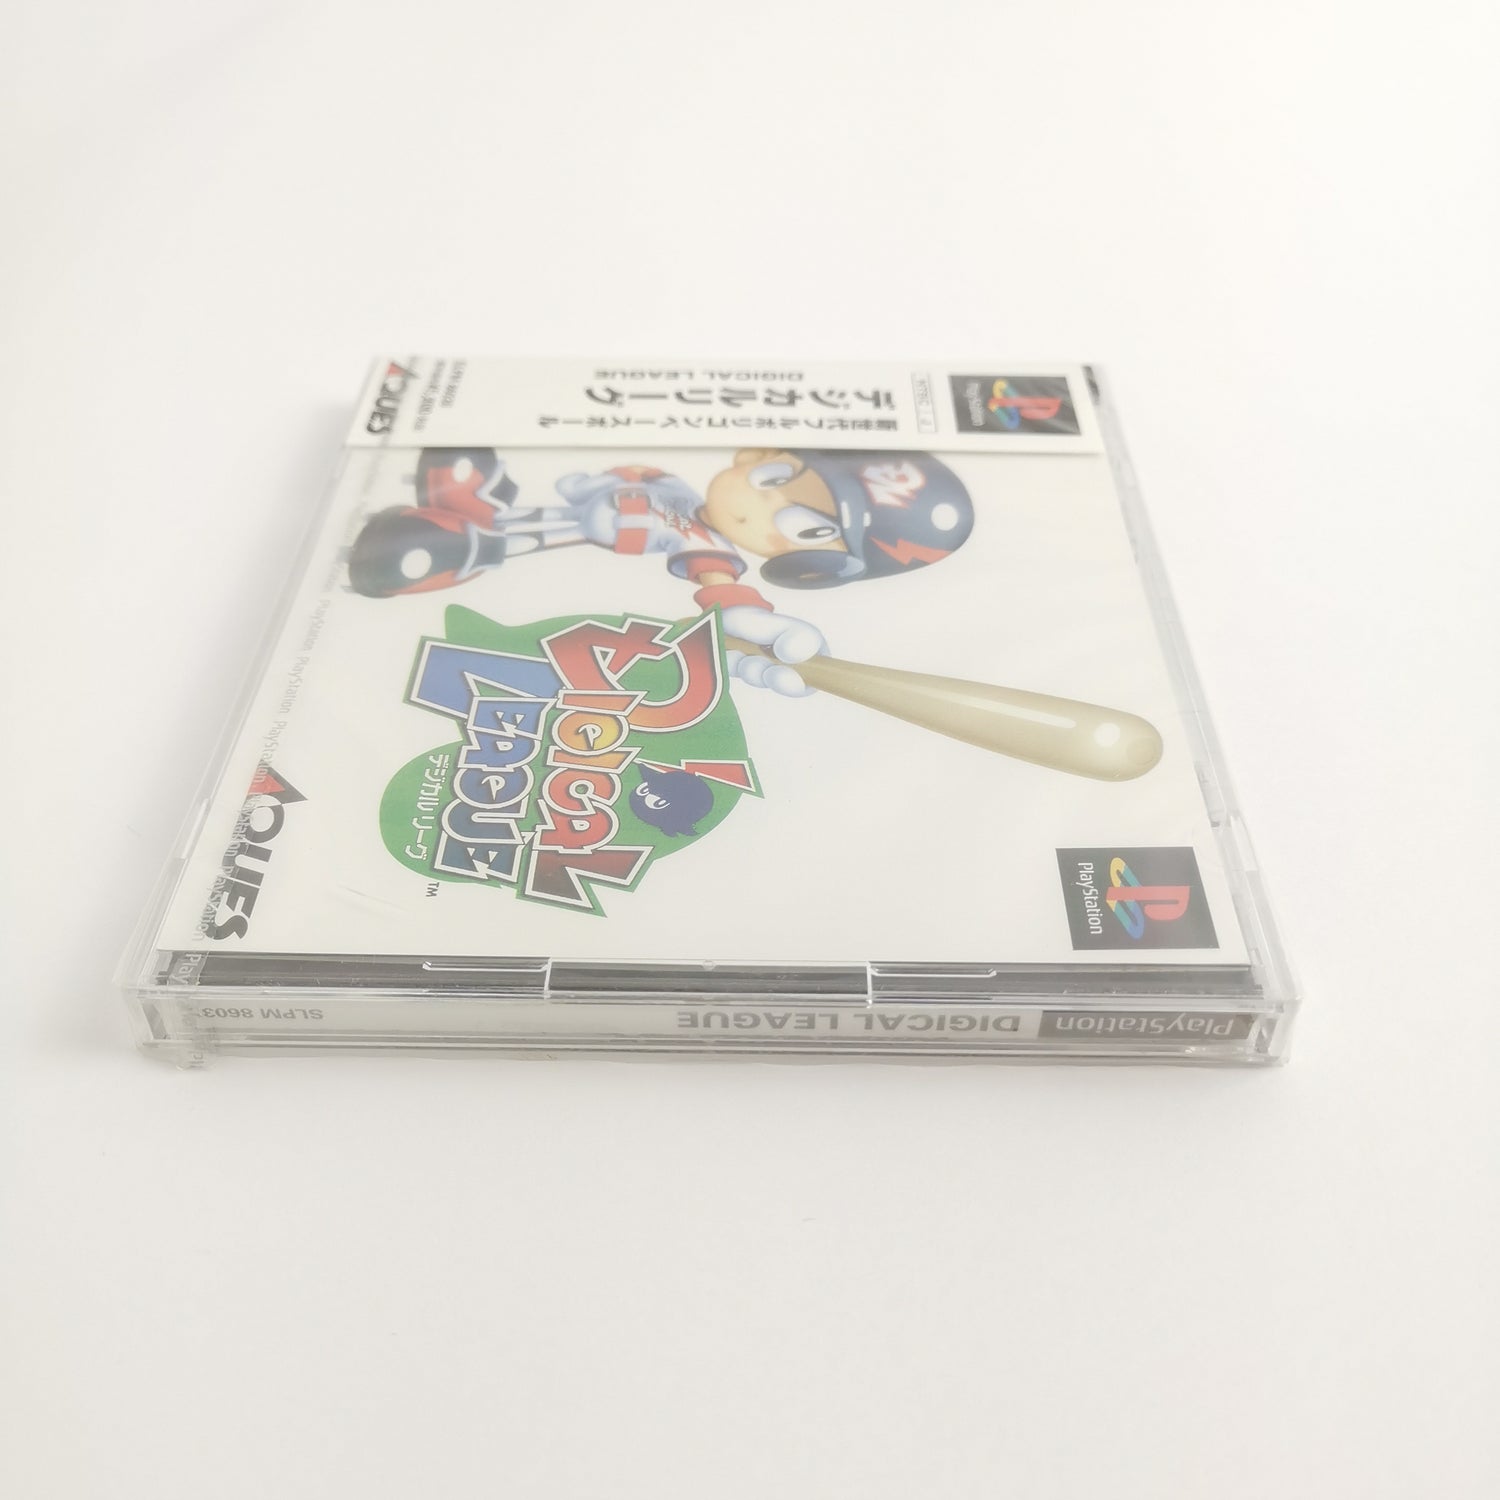 Sony Playstation 1 Spiel : Digical League Baseball | PS1 NEU - OVP NTSC-J Japan